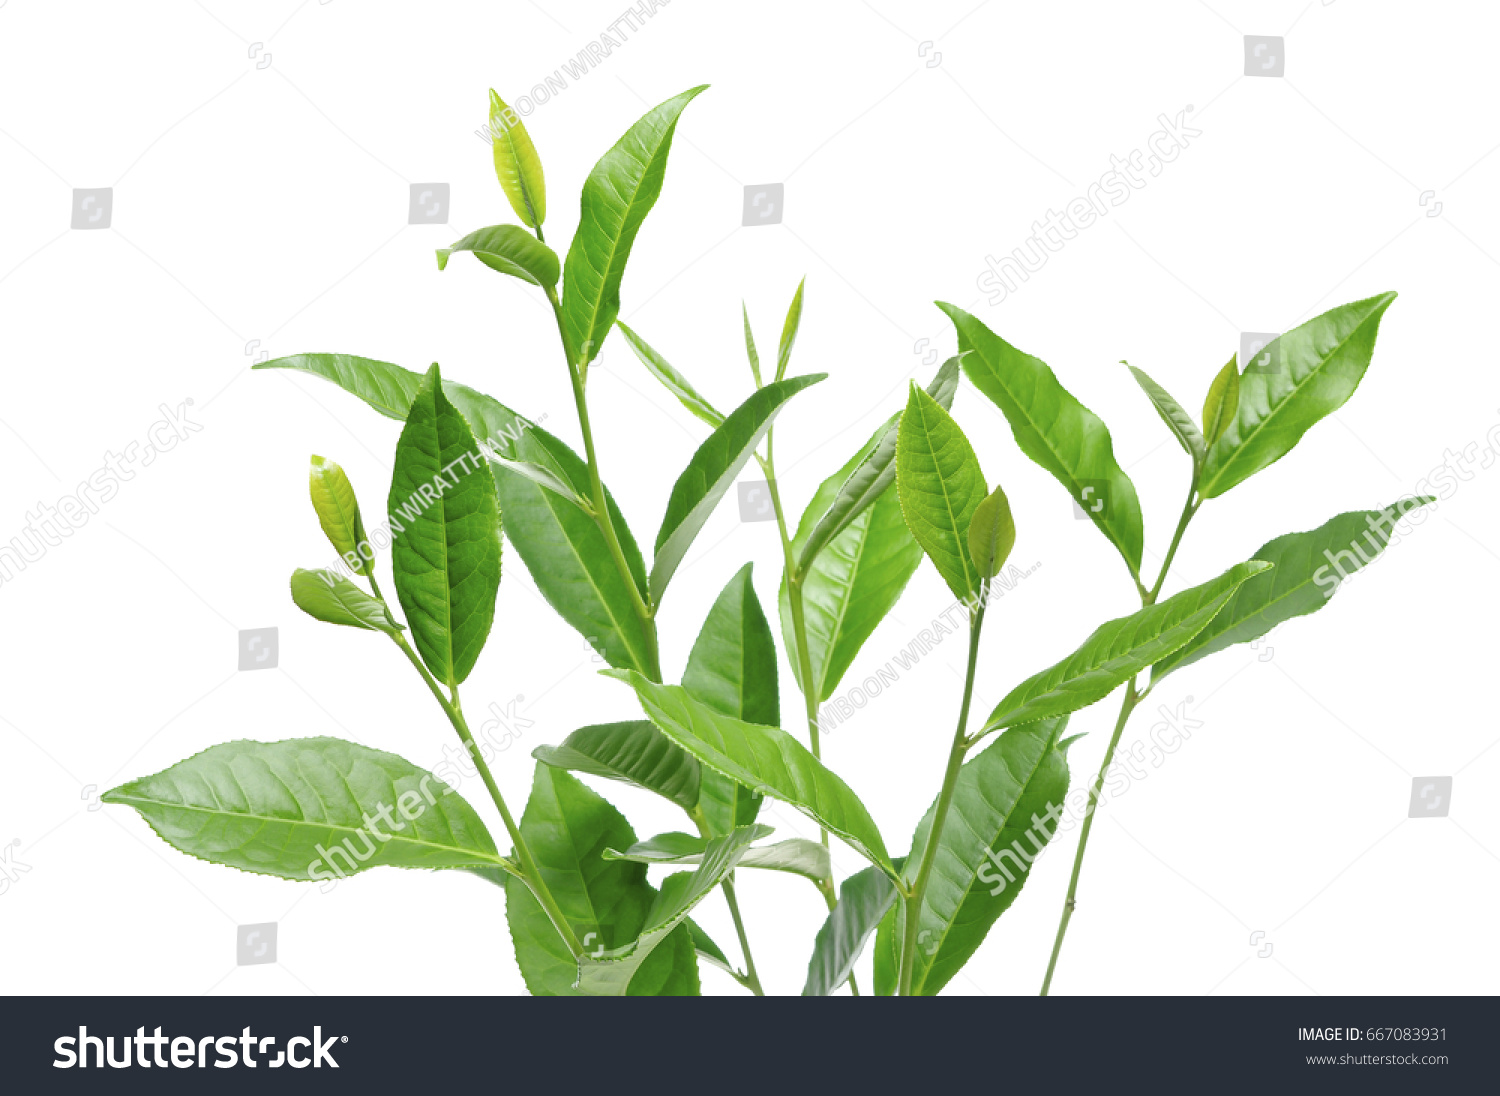 green tea leaf #667083931